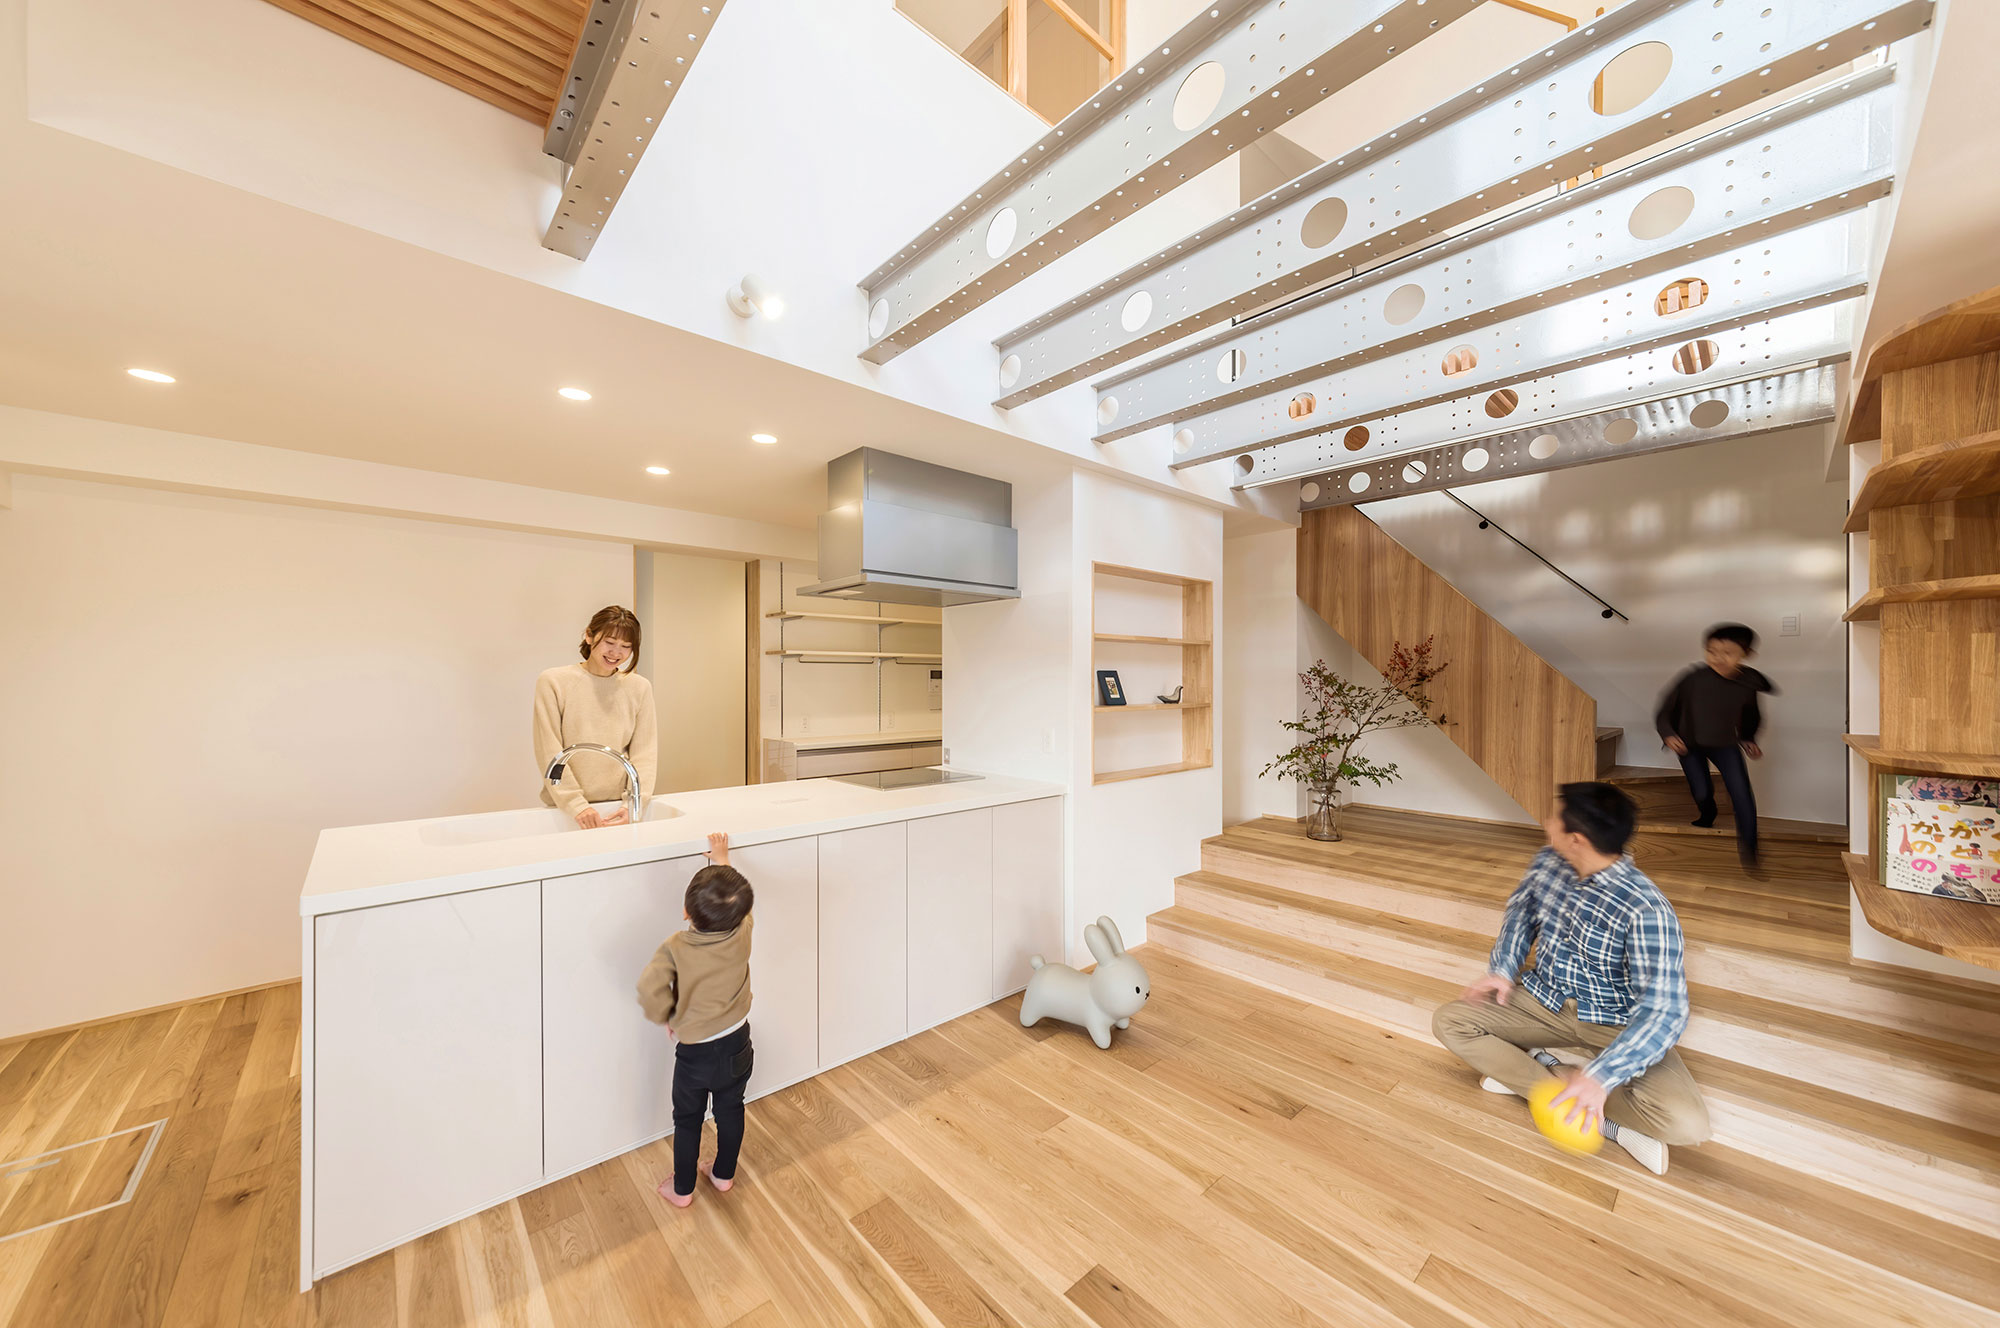 416 Architects 『型式認定のリノベーション』 2021年 戸建住宅リノベーション